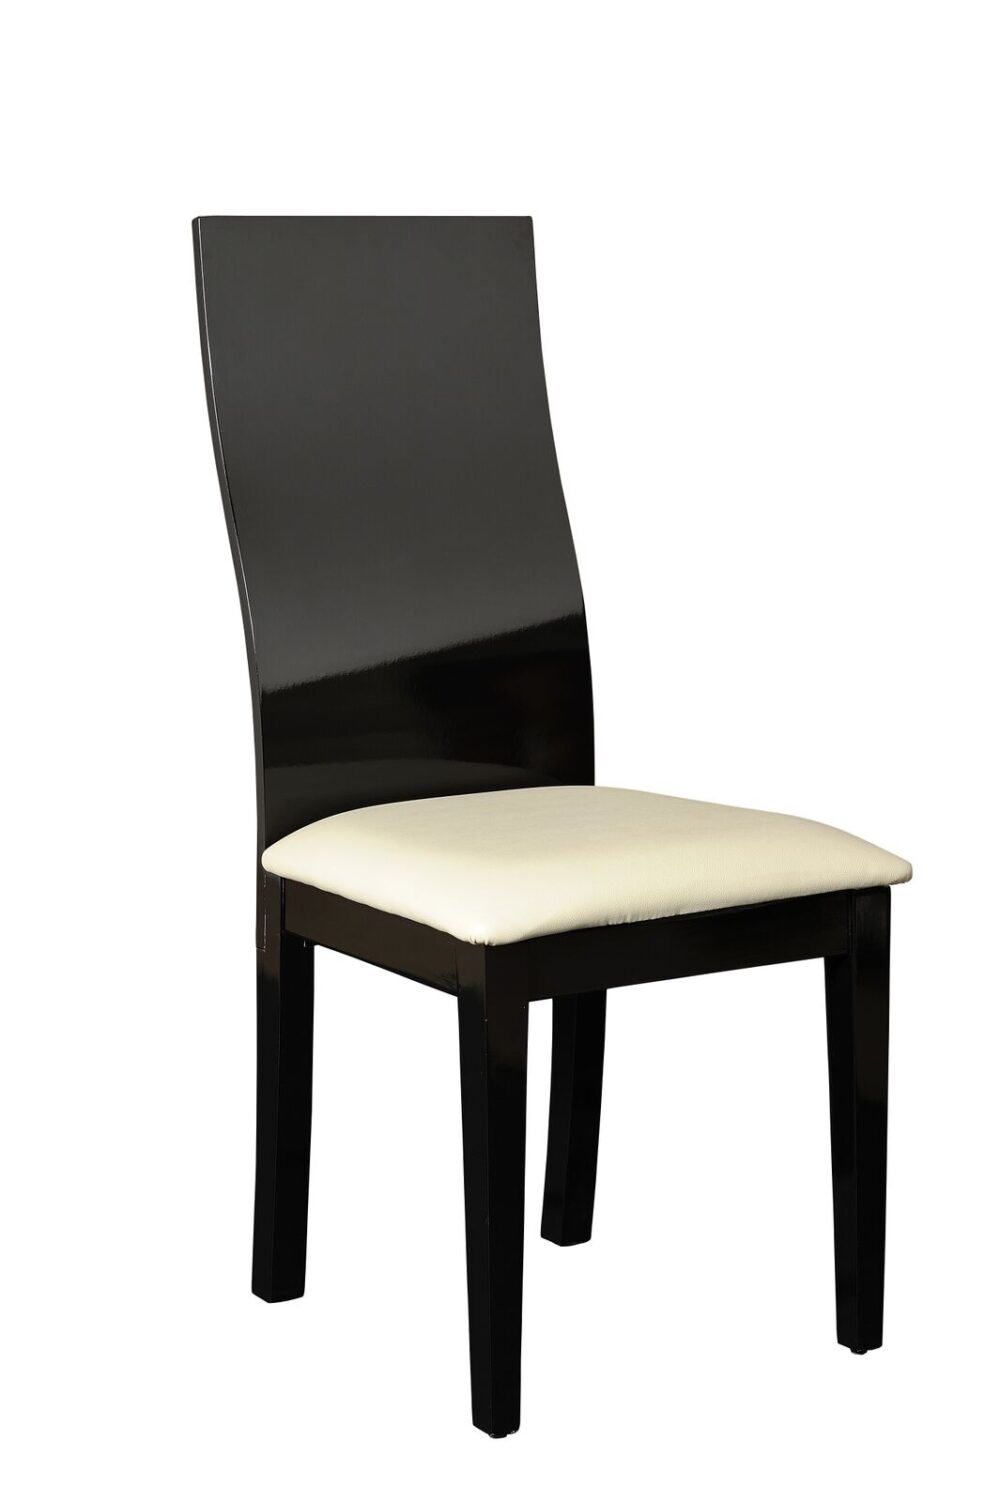 Logan Dining Set 4 to 6 Seater Black High Gloss Chair